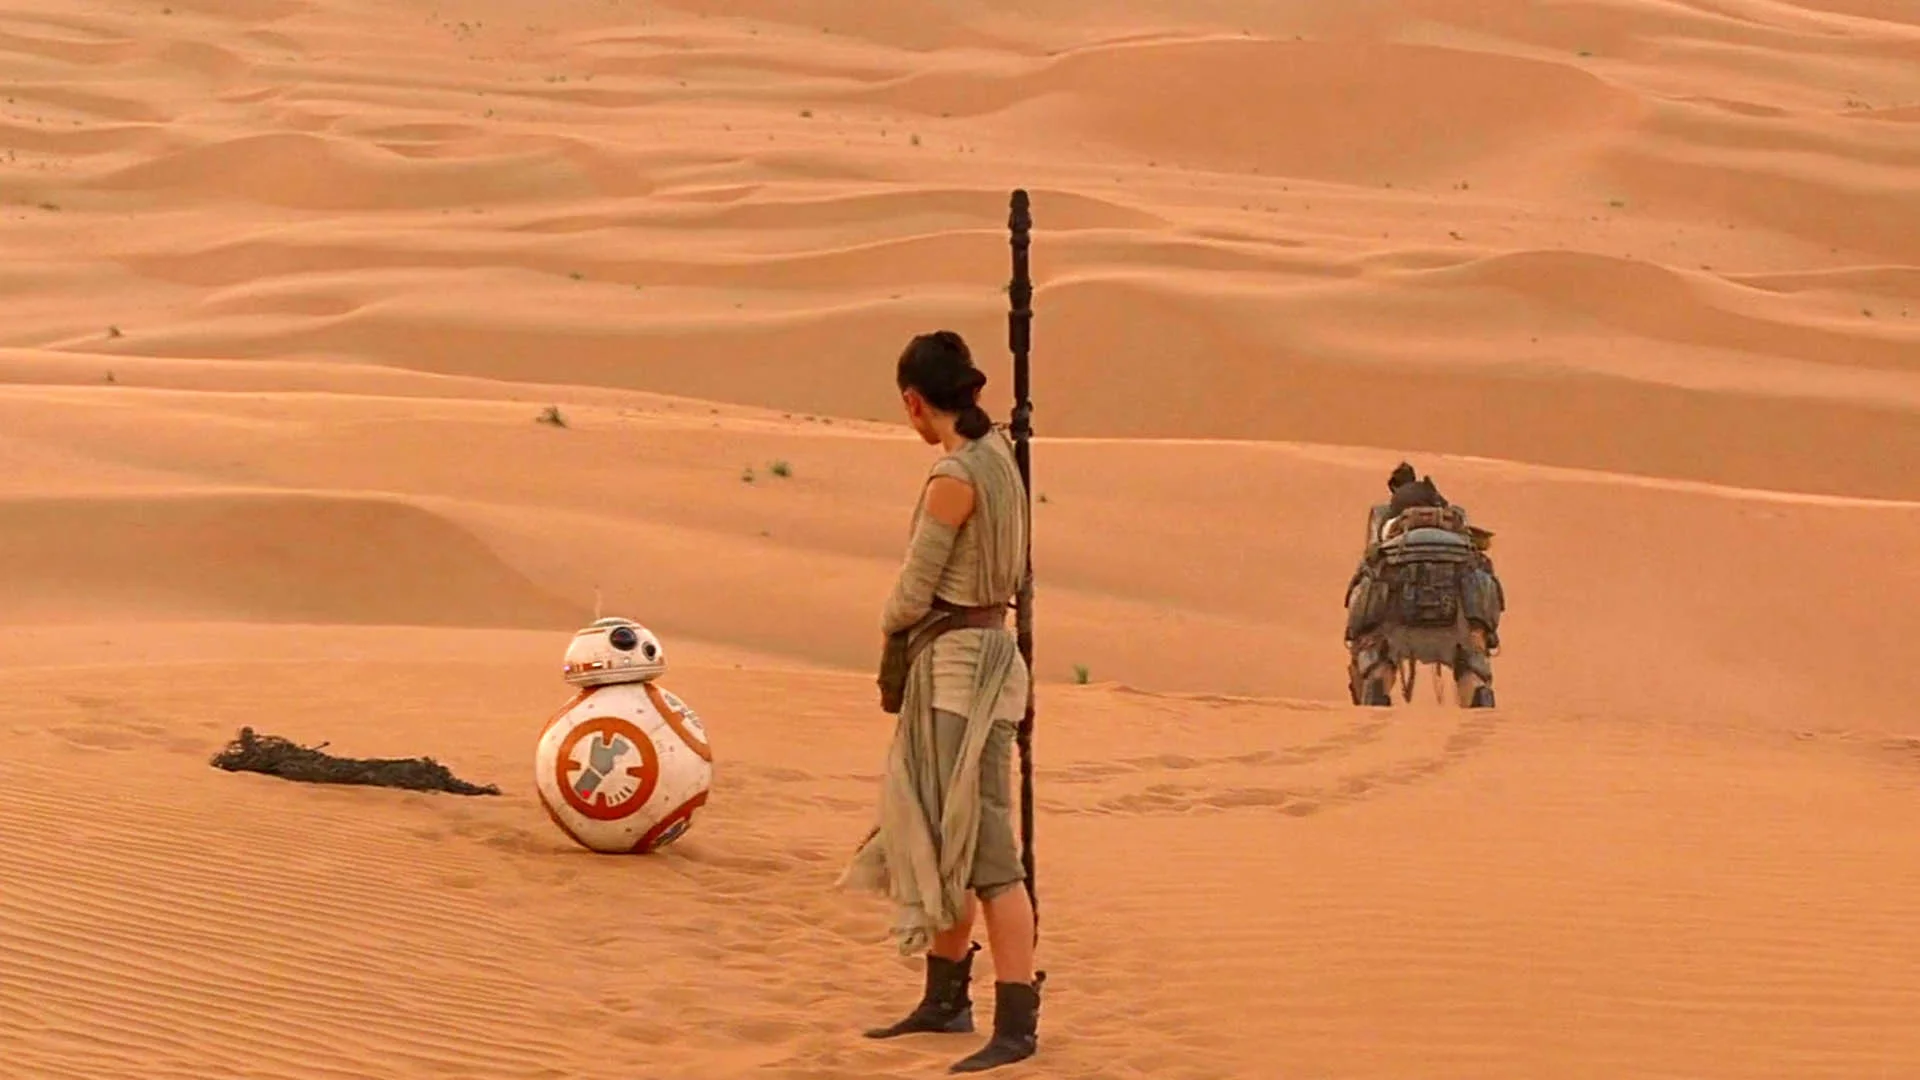 Rey encounters BB-8 – Star Wars: The Force Awakens wallpaper